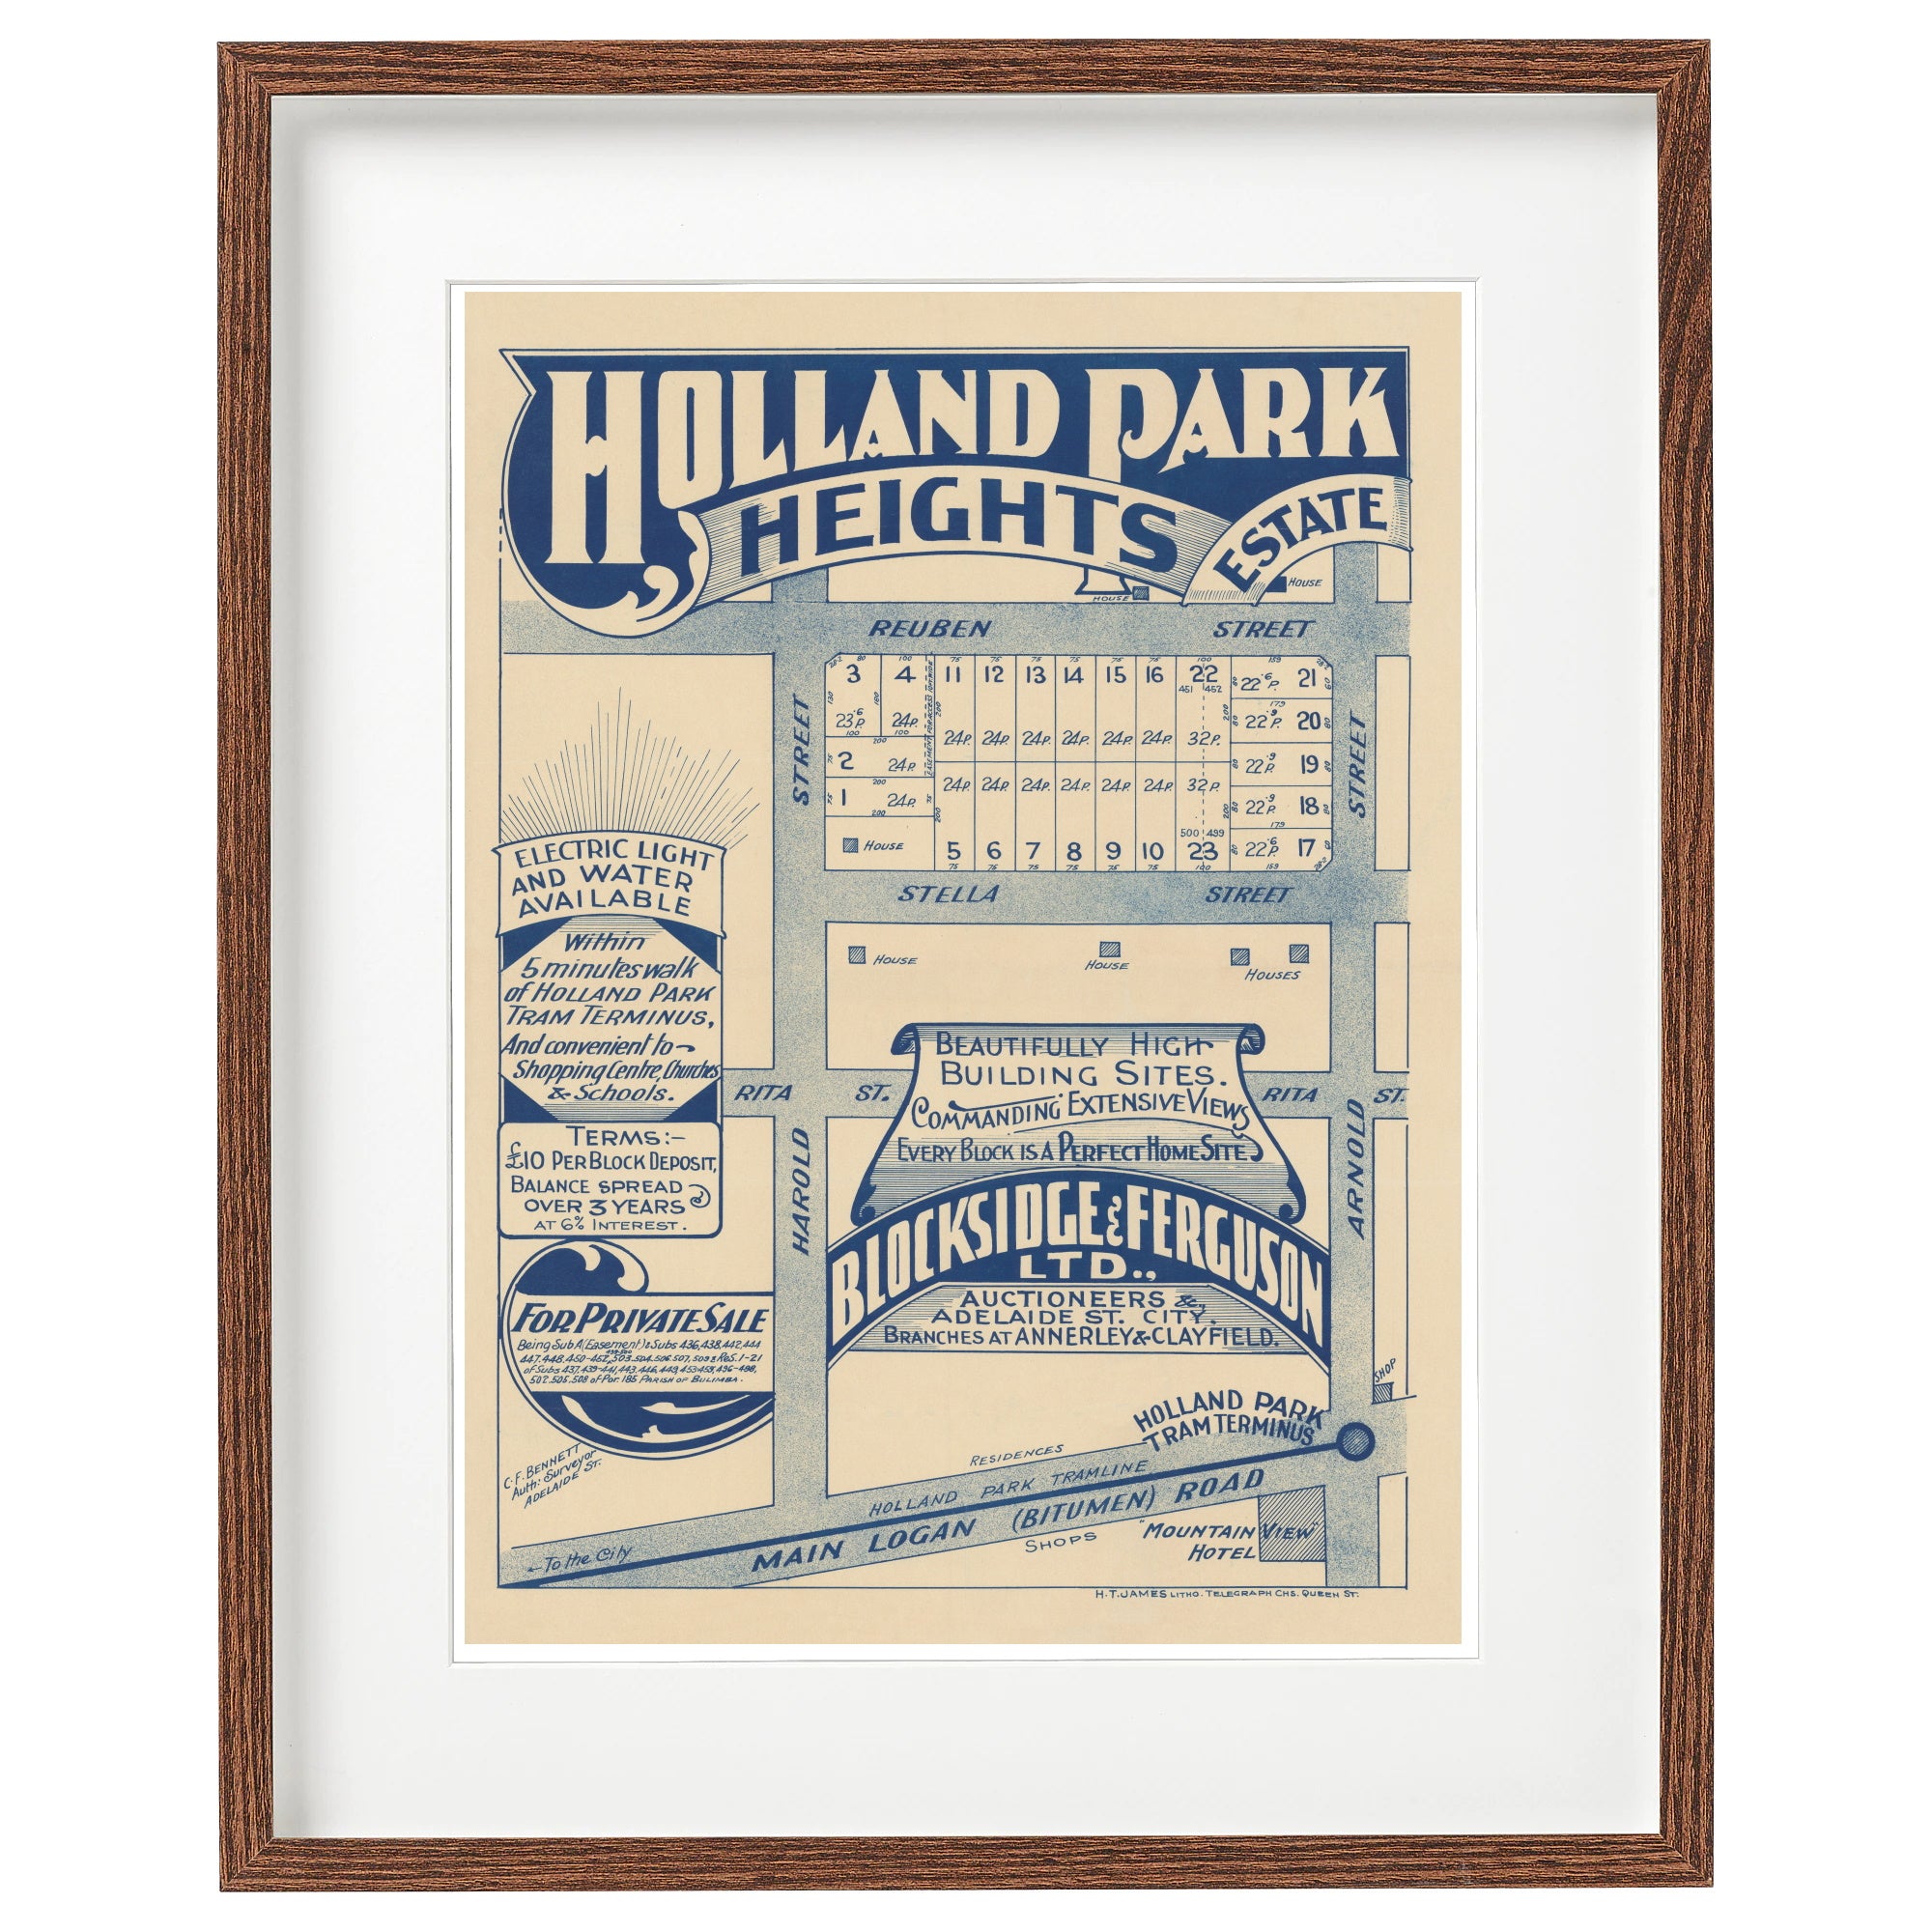 1932 Holland Park - Holland Park Heights